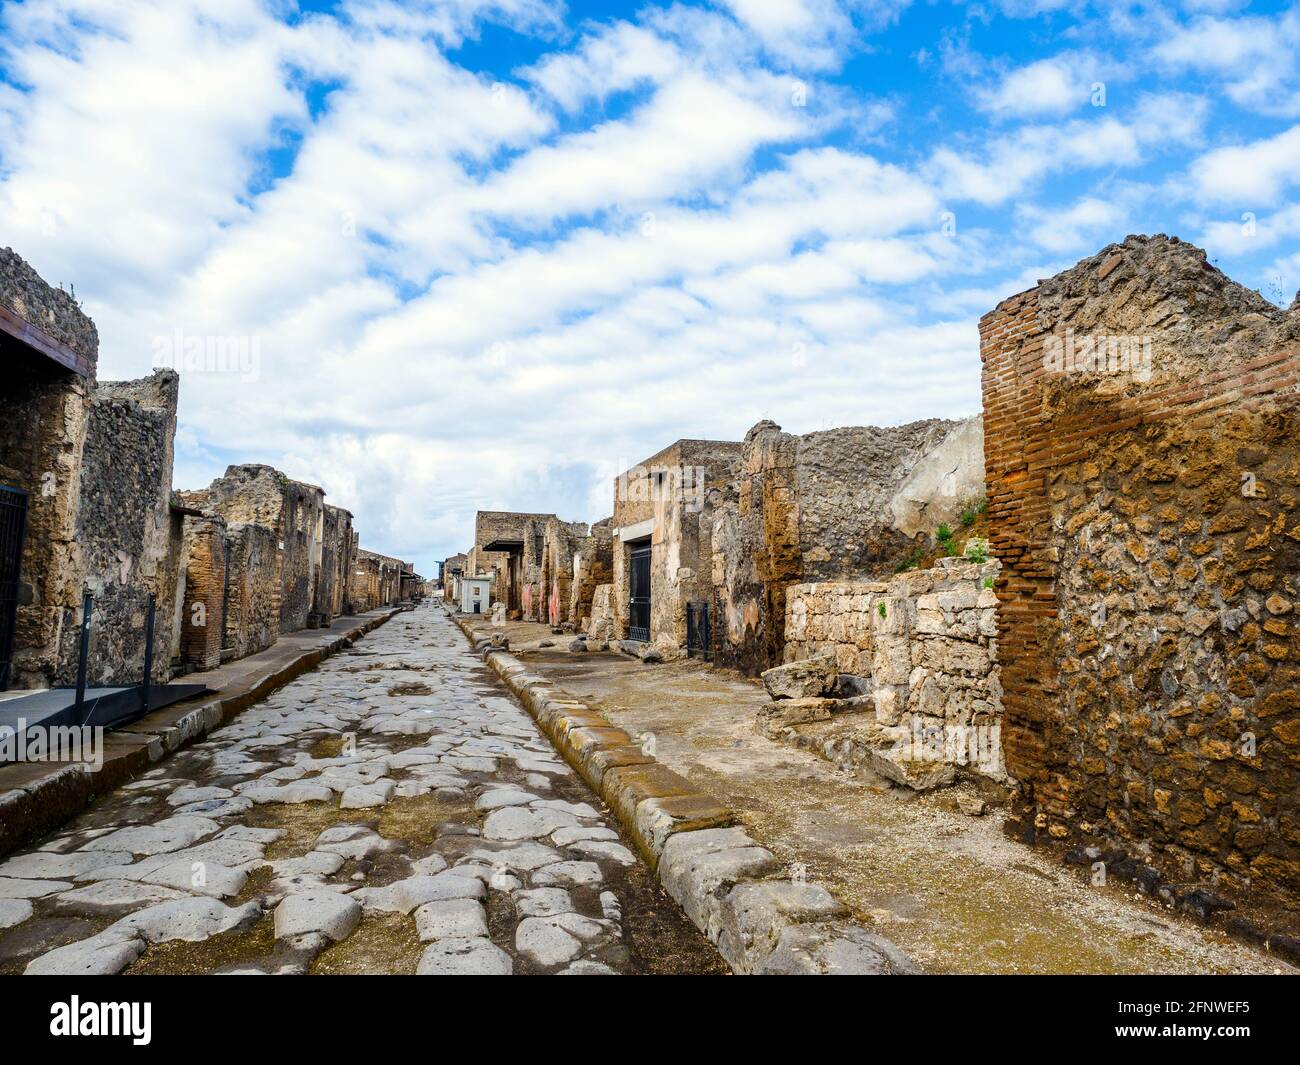 Via dell'Abbondanza - Pompeii archaeological site, Italy Stock Photo